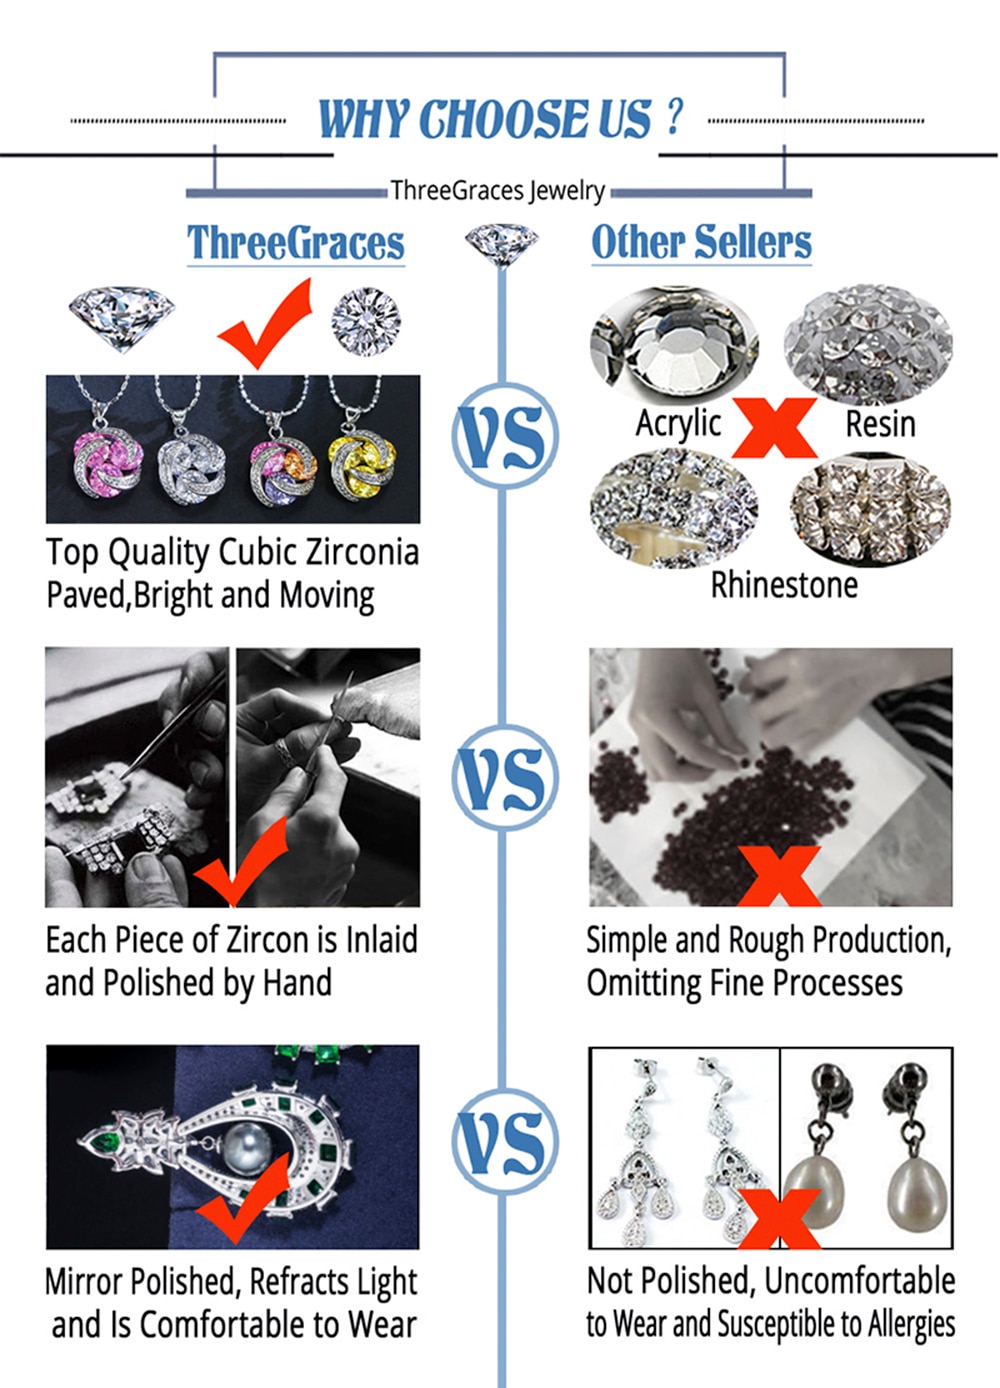 ThreeGraces-Unique-Rainbow-CZ-Crystal-Round-Shape-Choker-Necklace-Earrings-Jewelry-Set-for-Women-Par-1005002282791471-9